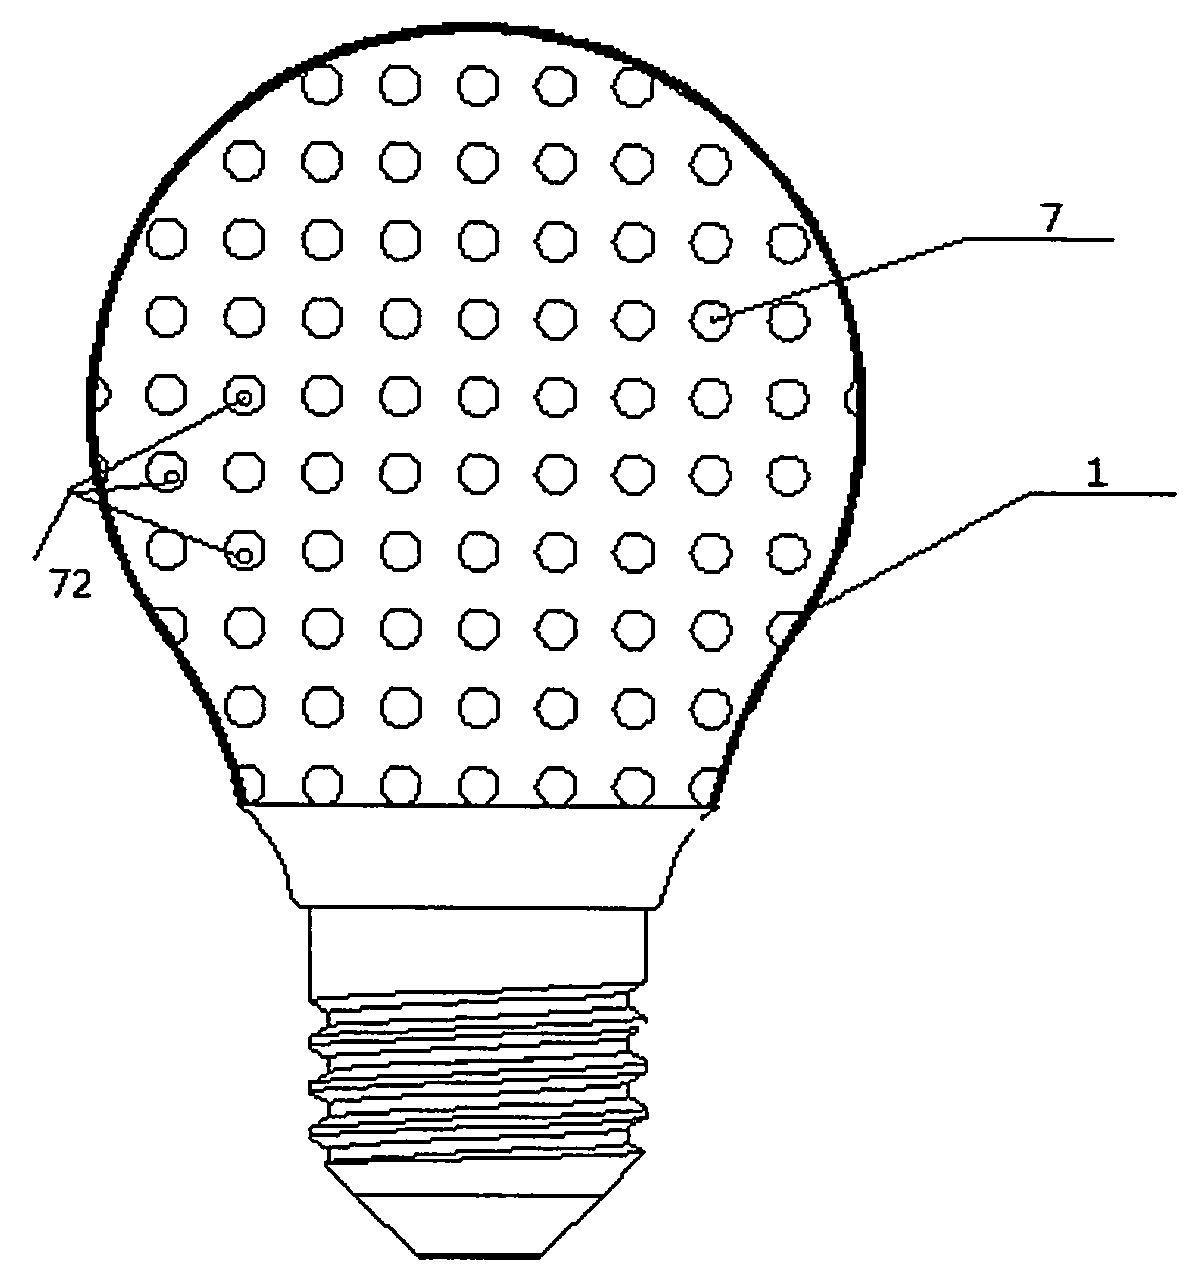 Multiple-point-distribution LED lamp